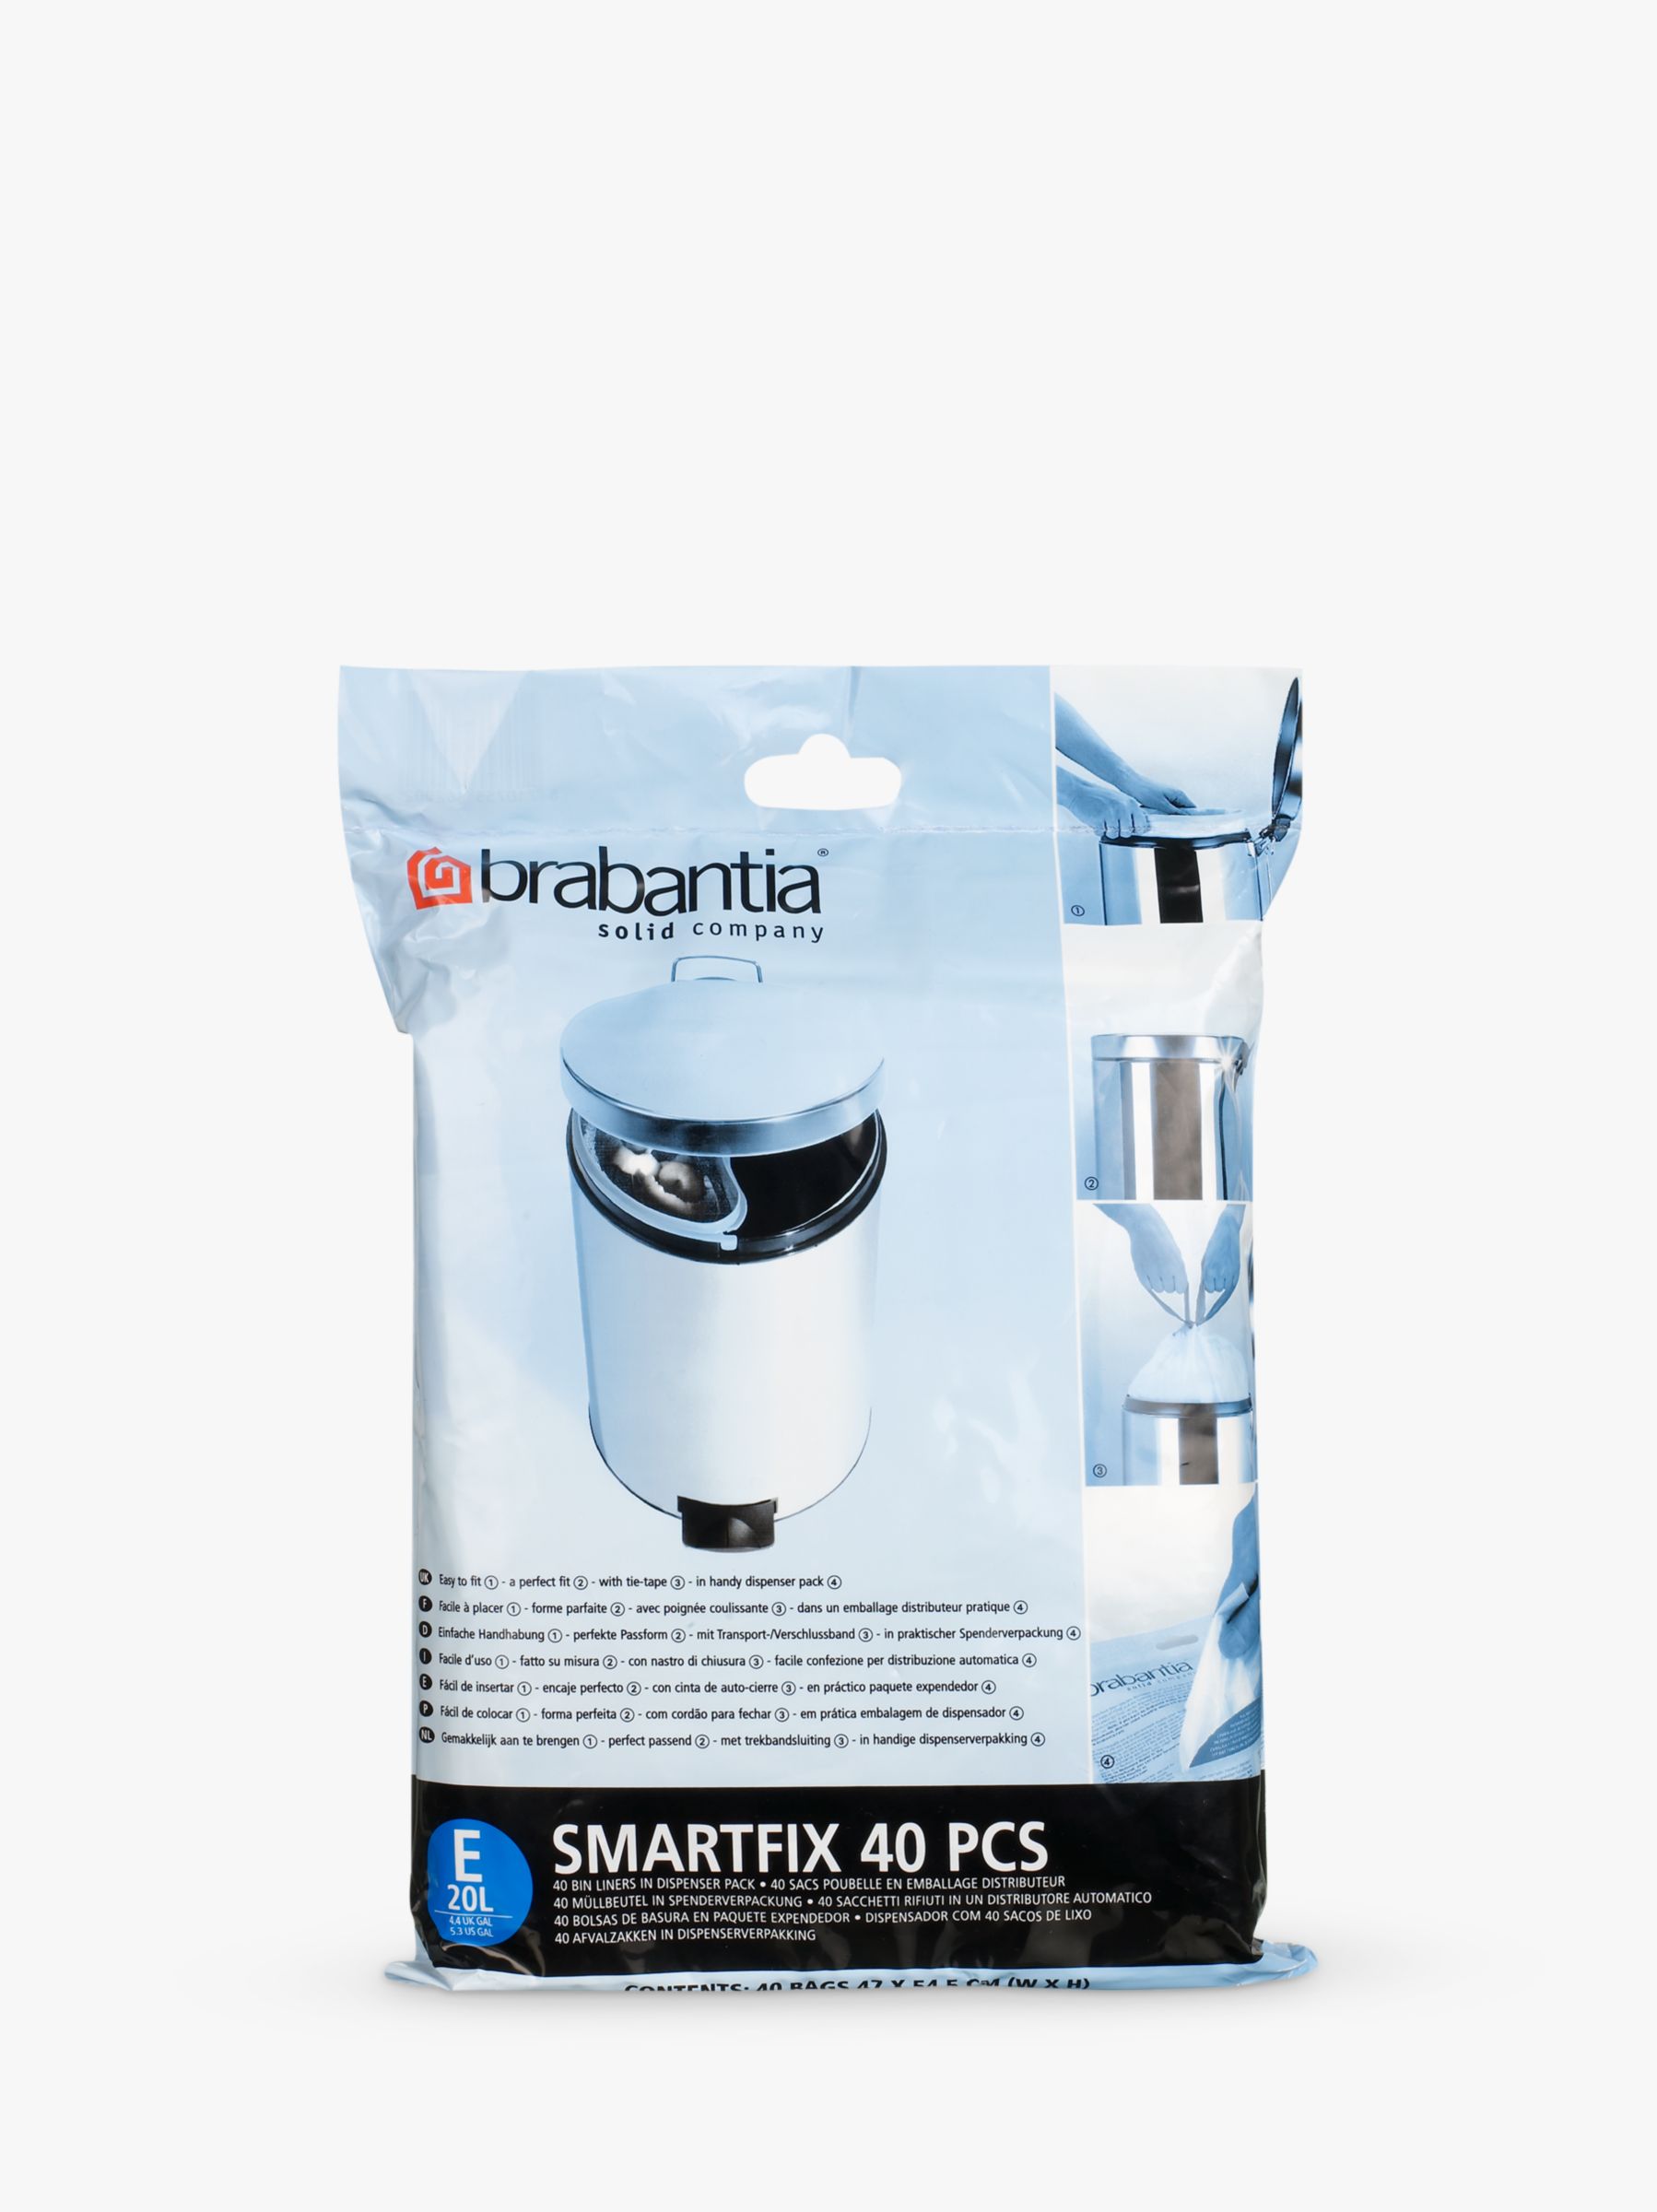 Brabantia Smartfix Bin Liners, E, 20L